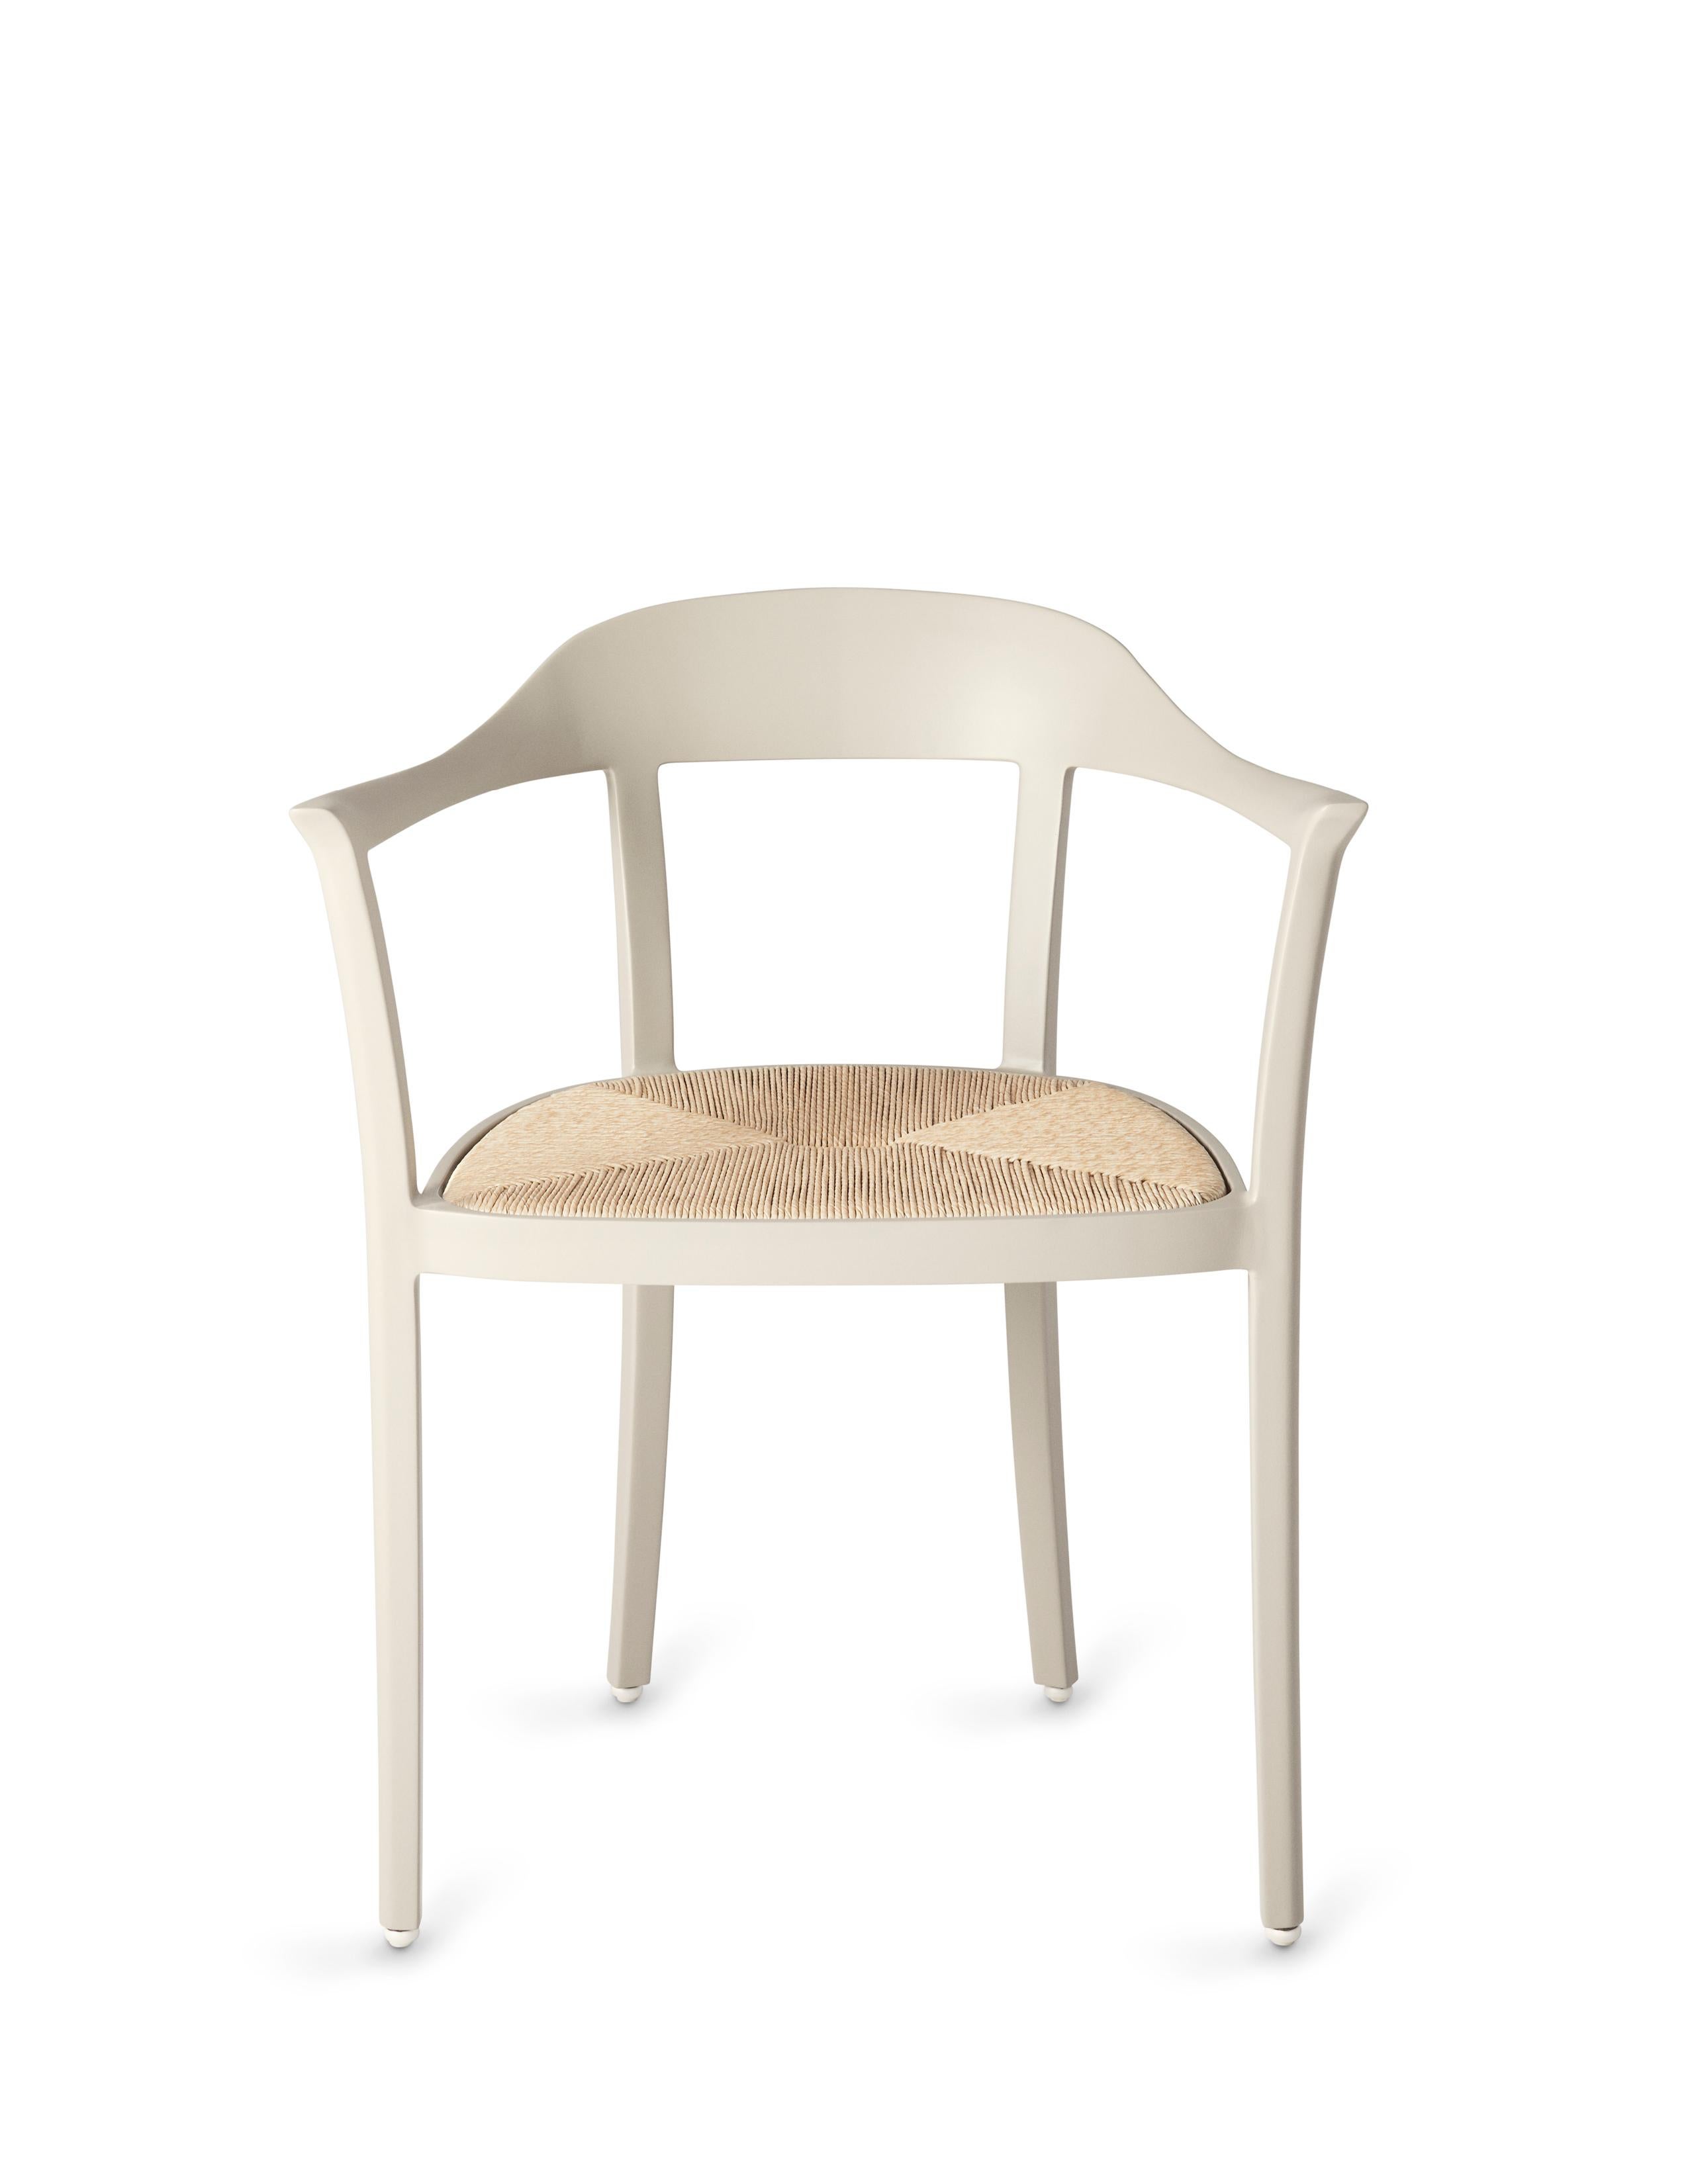 Powder-Coated Chesapeake Dining Chair, Classic White, Woven Rush, Outdoor Garden Furniture